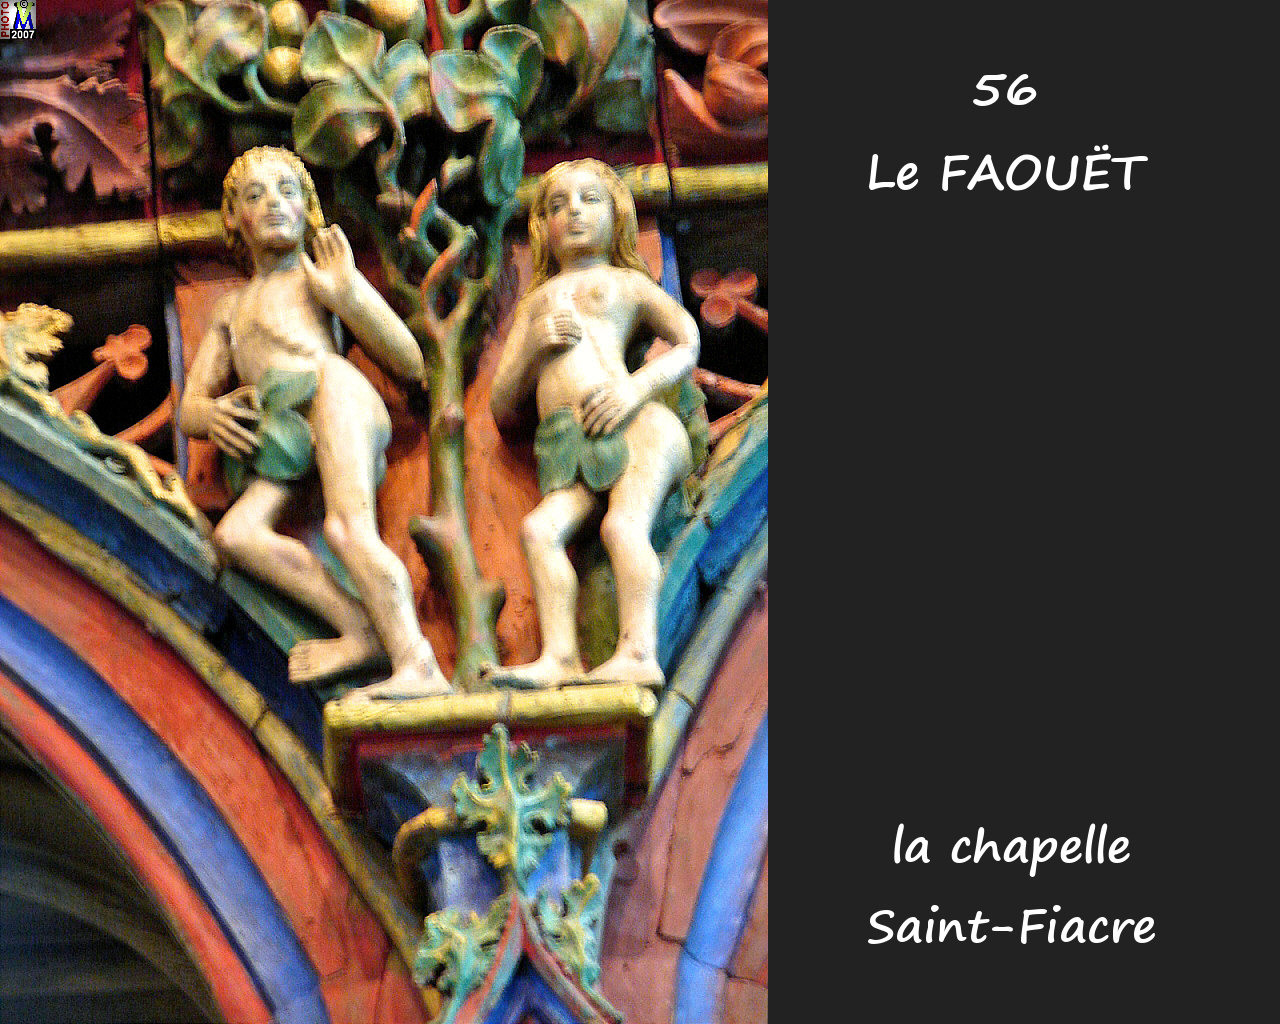 56FAOUET_chapelle-fiacre_224.jpg